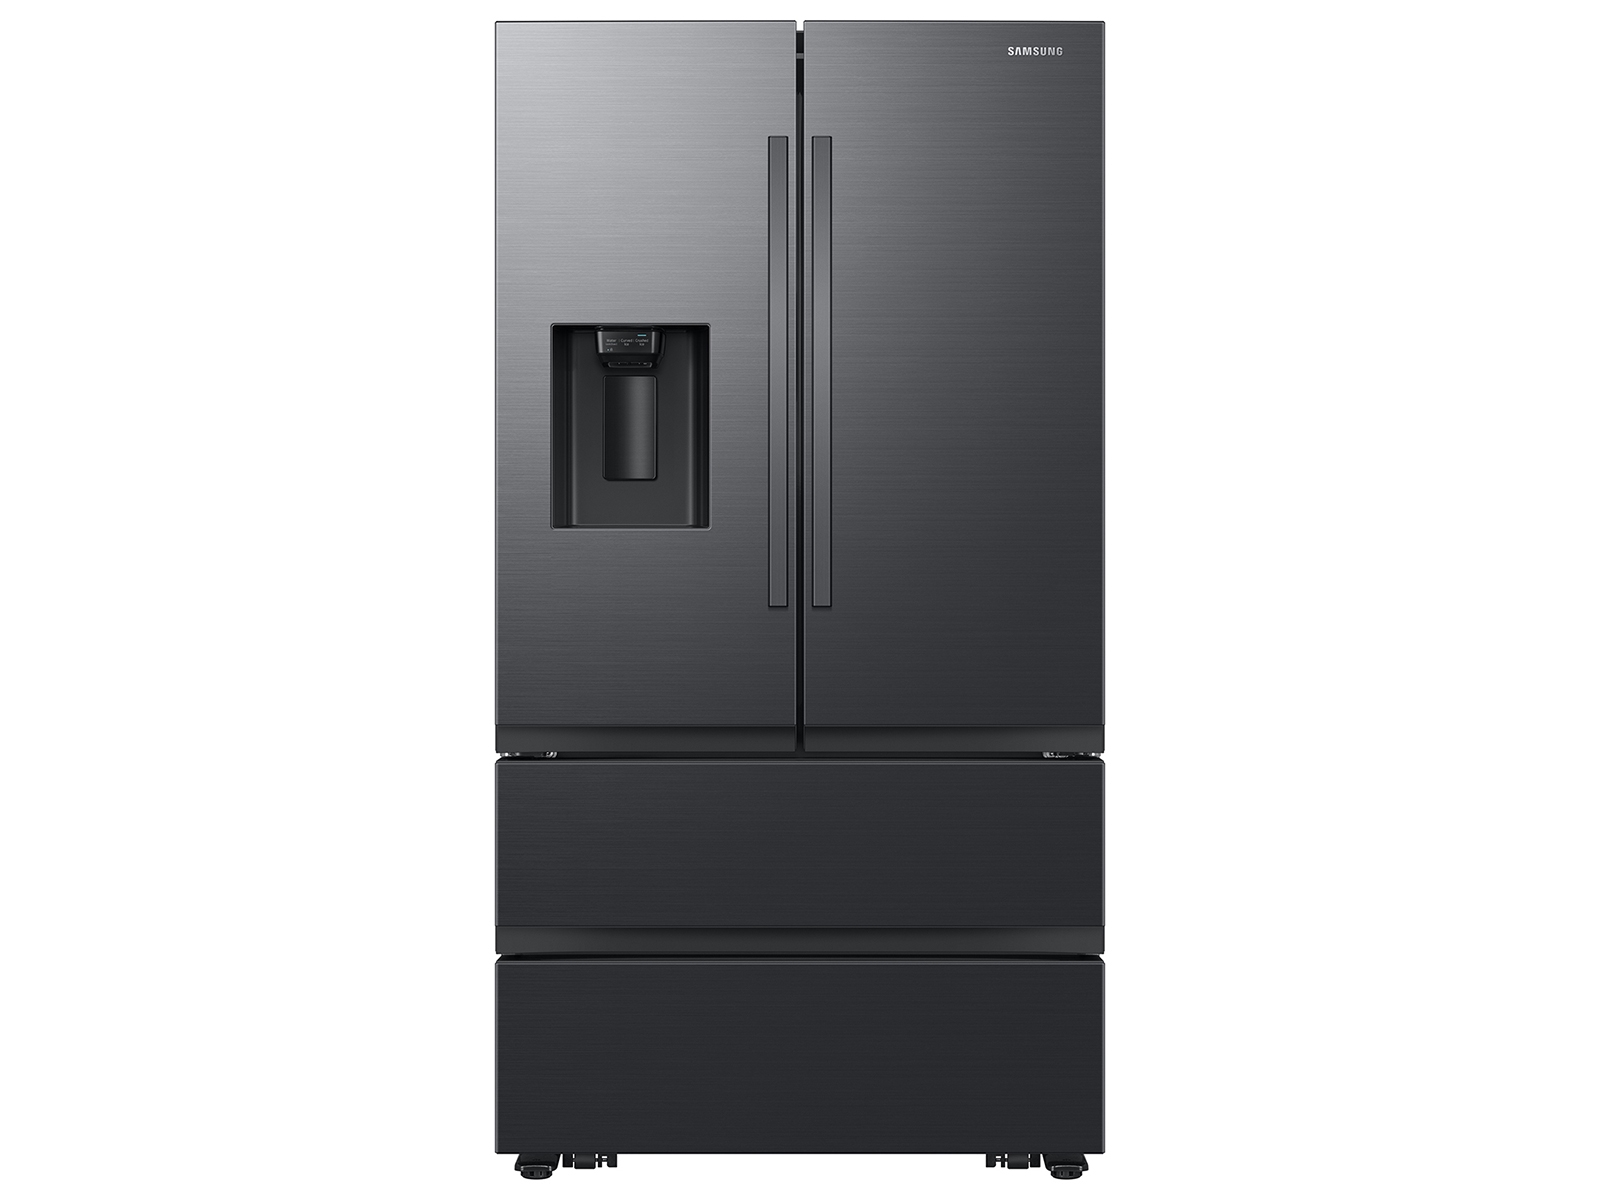 Photos - Fridge Samsung 30 cu. ft. Mega Capacity 4-Door French Door Refrigerator with Four 